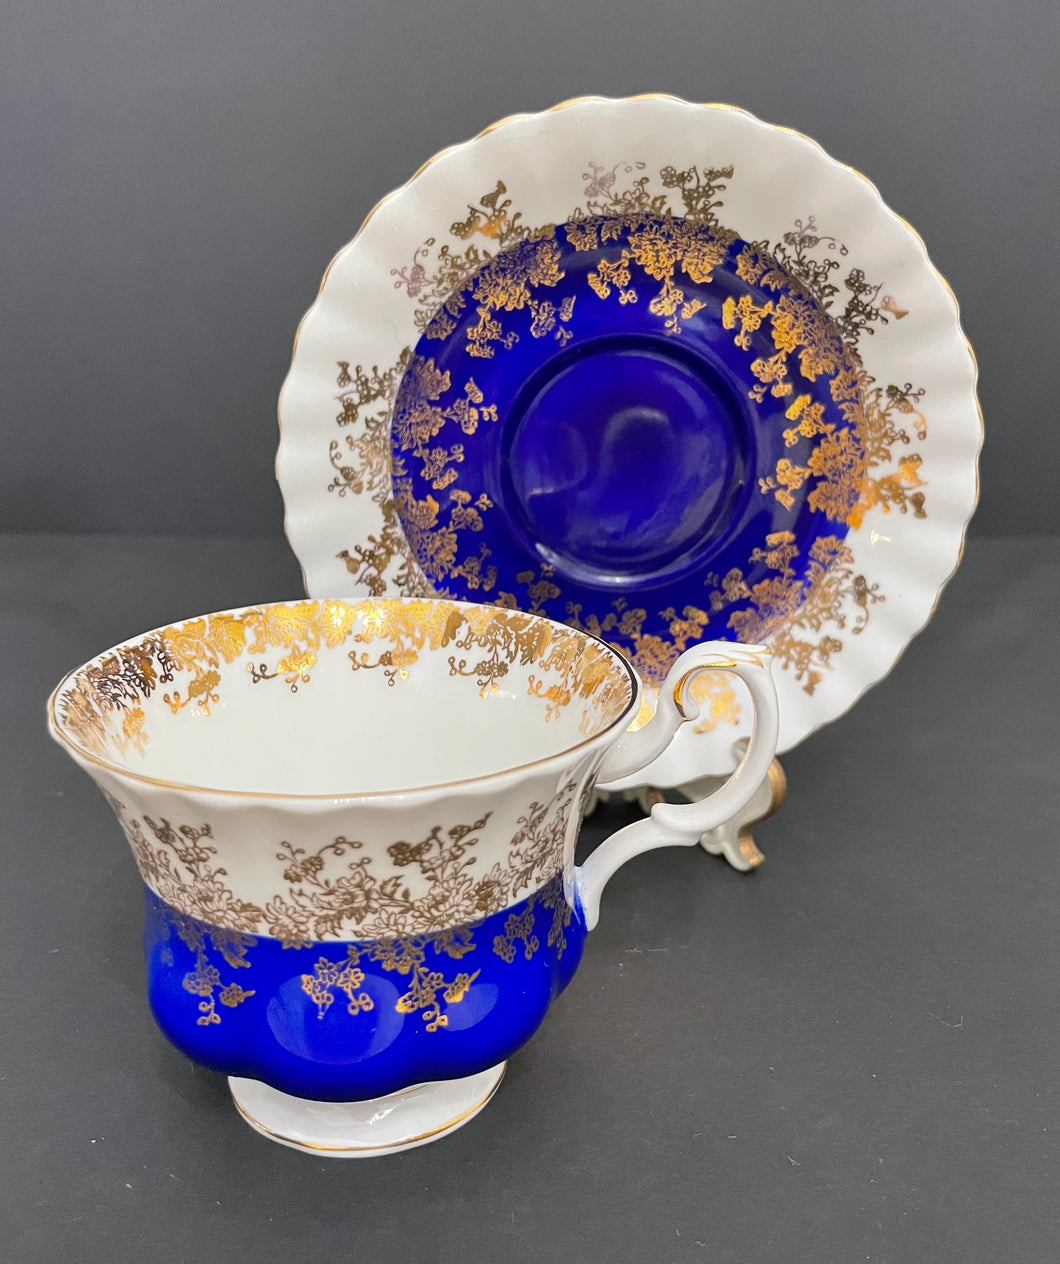 BEAUTIFUL Vintage Royal Albert Porcelain Regal Series Blue Tea Cup and Saucer